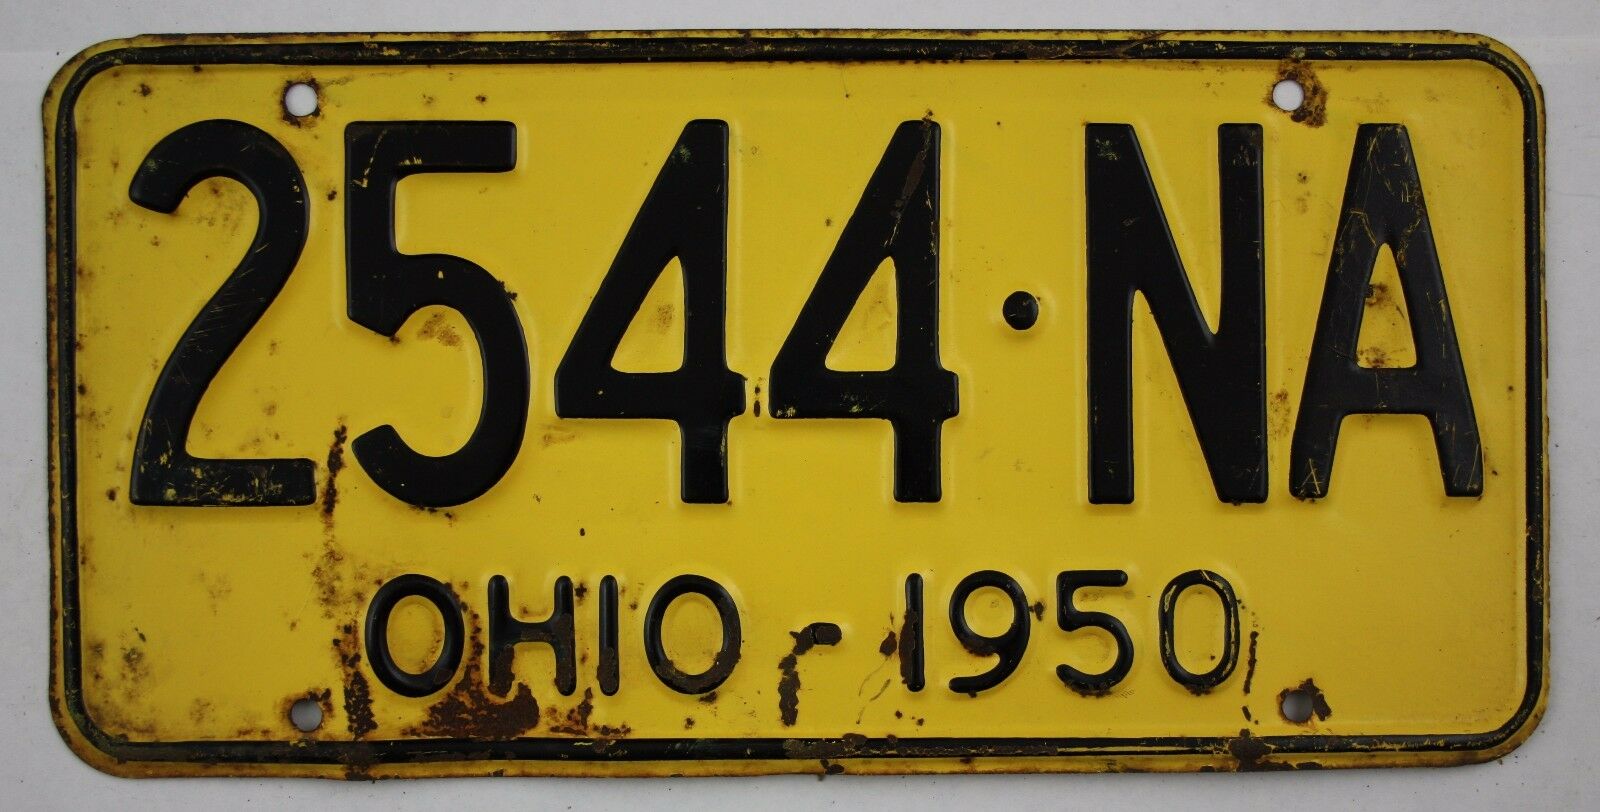 1950 Vintage Original Ohio License Plate Tag 2544-na